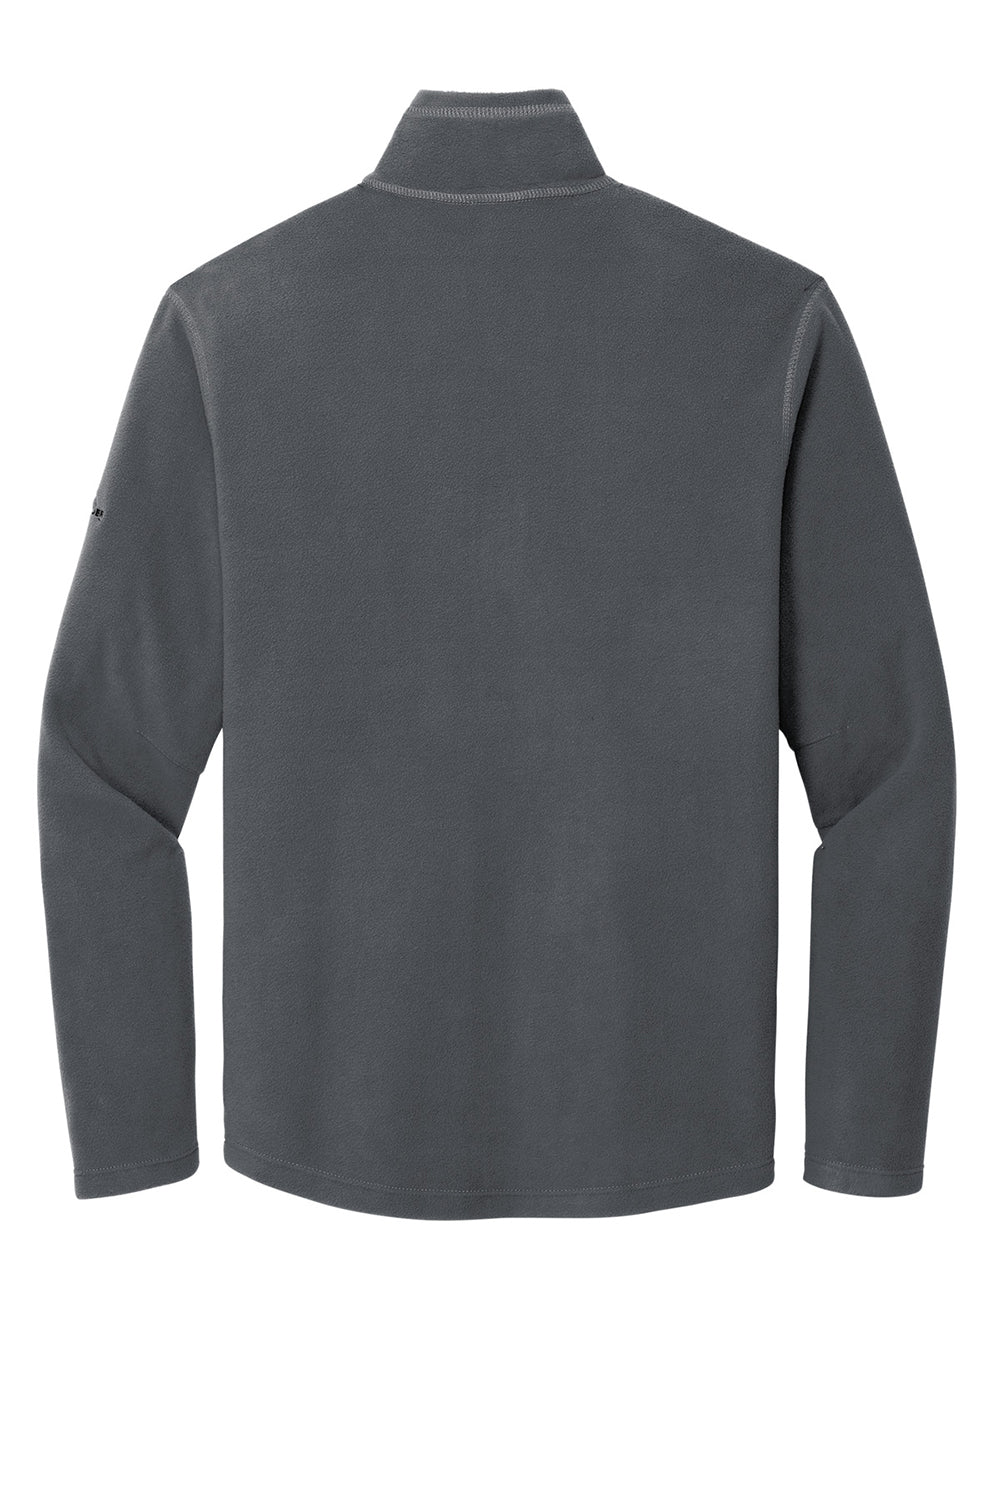 Eddie Bauer EB226 Mens Pill Resistant Microfleece 1/4 Zip Sweatshirt Steel Grey Flat Back